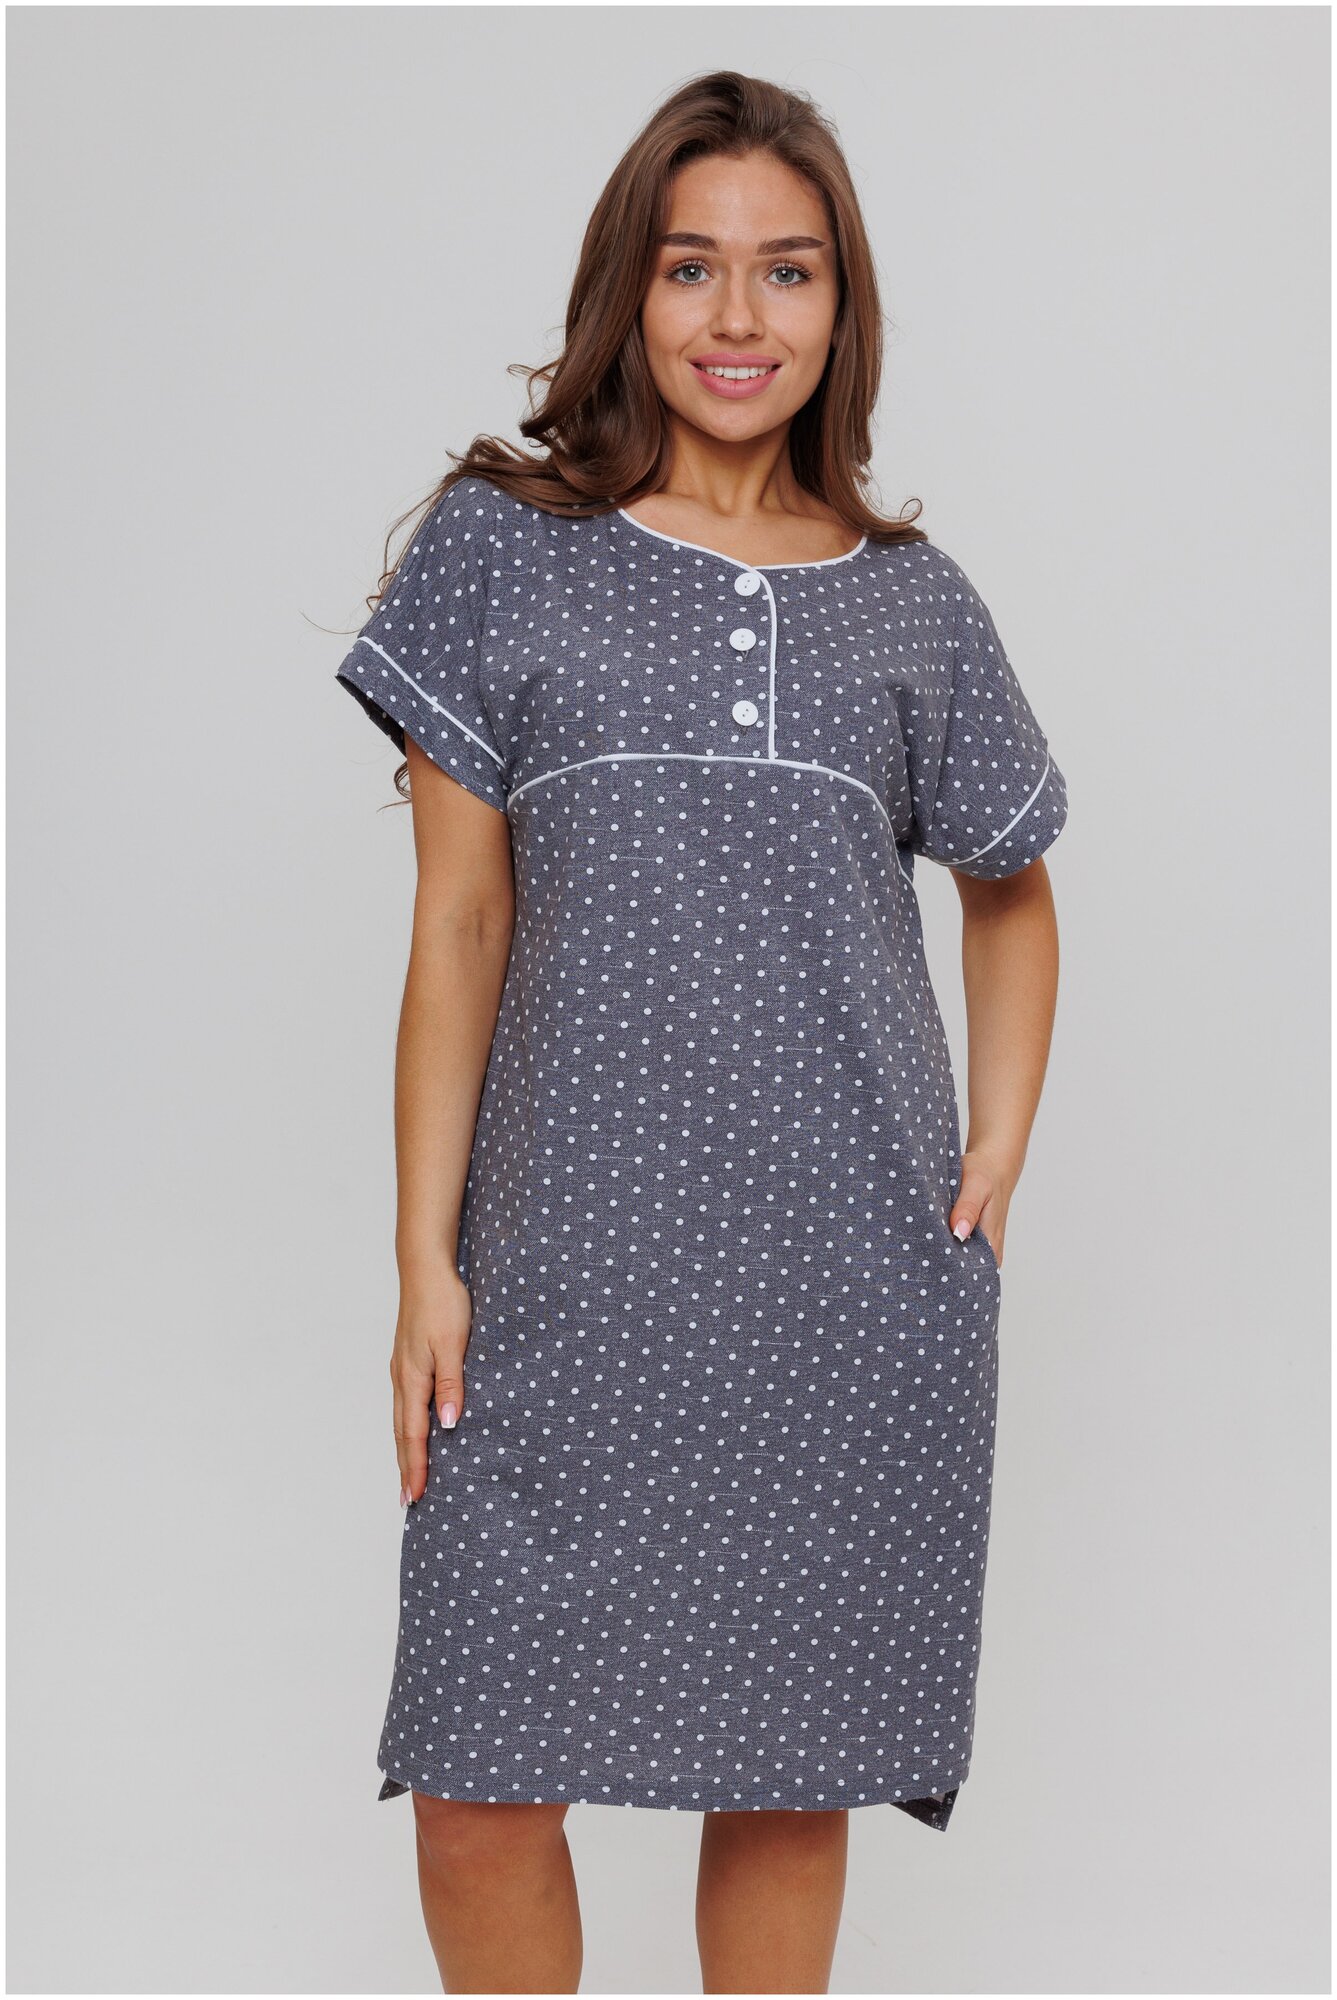 Платье-туника домашнее Modellini 1702/3 серый, 48 размер - фотография № 1